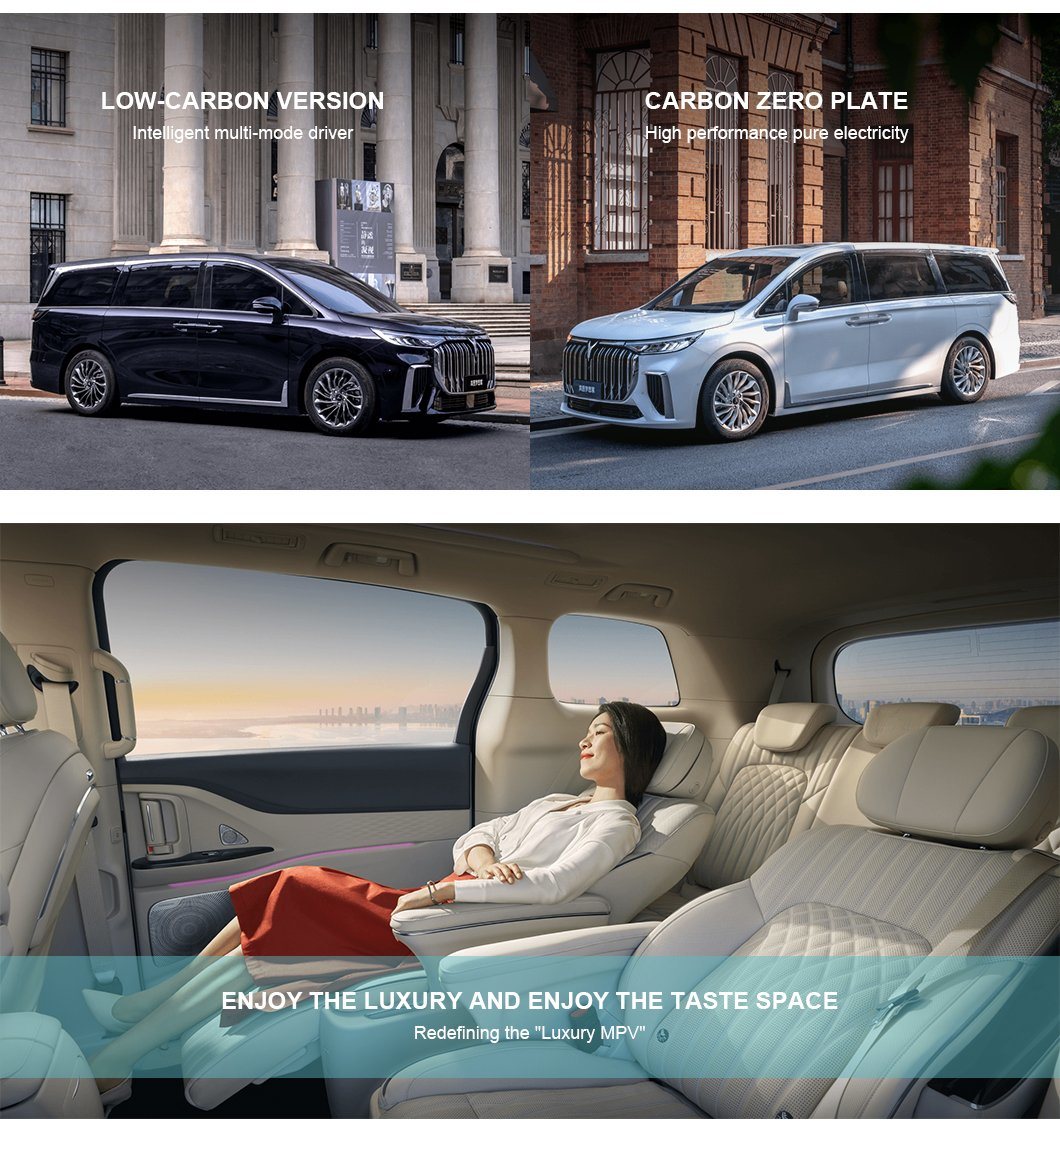 Medium Large MPV Luxury New Energy Hybrid Phev Voyah 7 Seater Voyah Dreamer Free Electric Cars